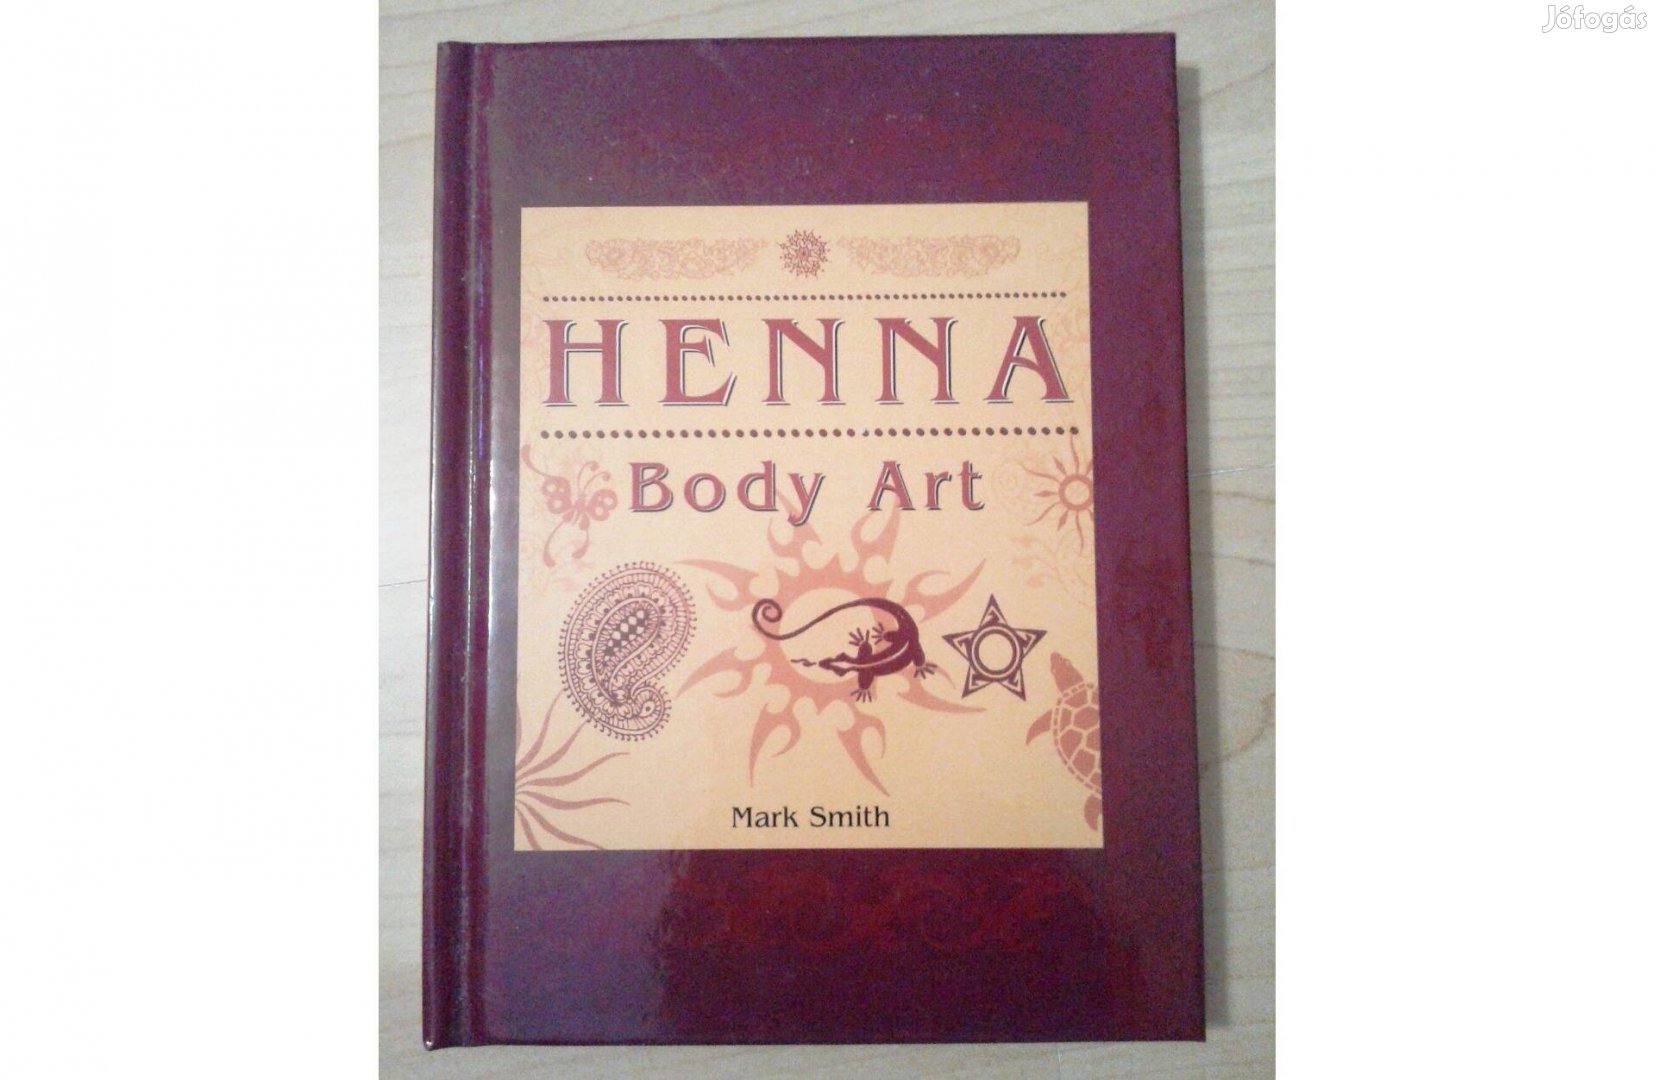 Mark Smith: Henna Body Art